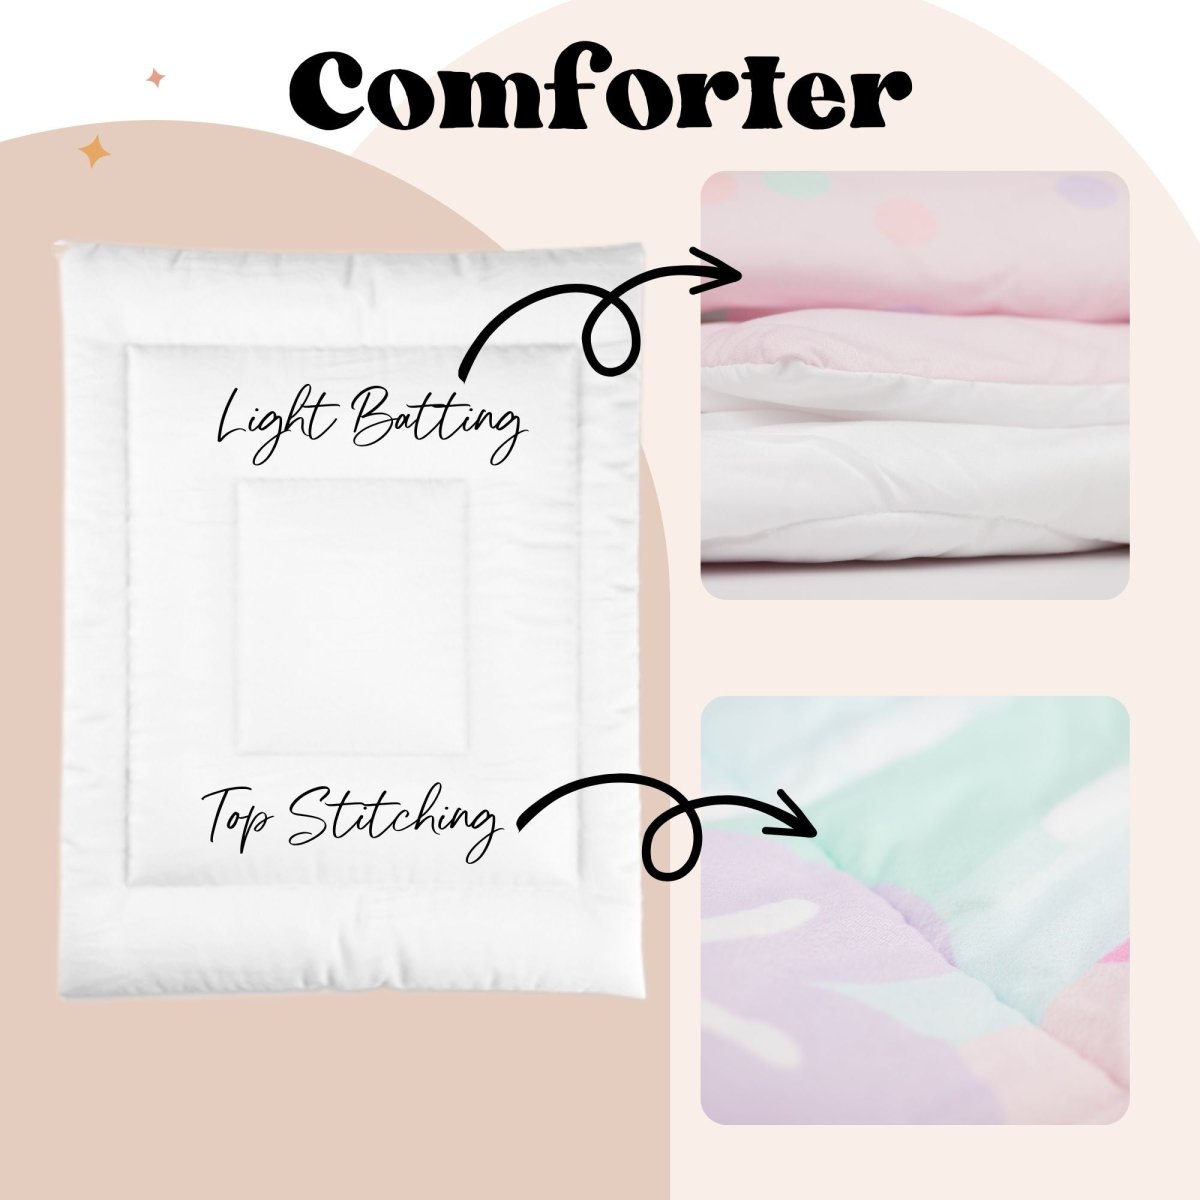 Mod Safari Kids Bedding Set (Comforter or Duvet Cover) - gender_boy, Mod Safari, text